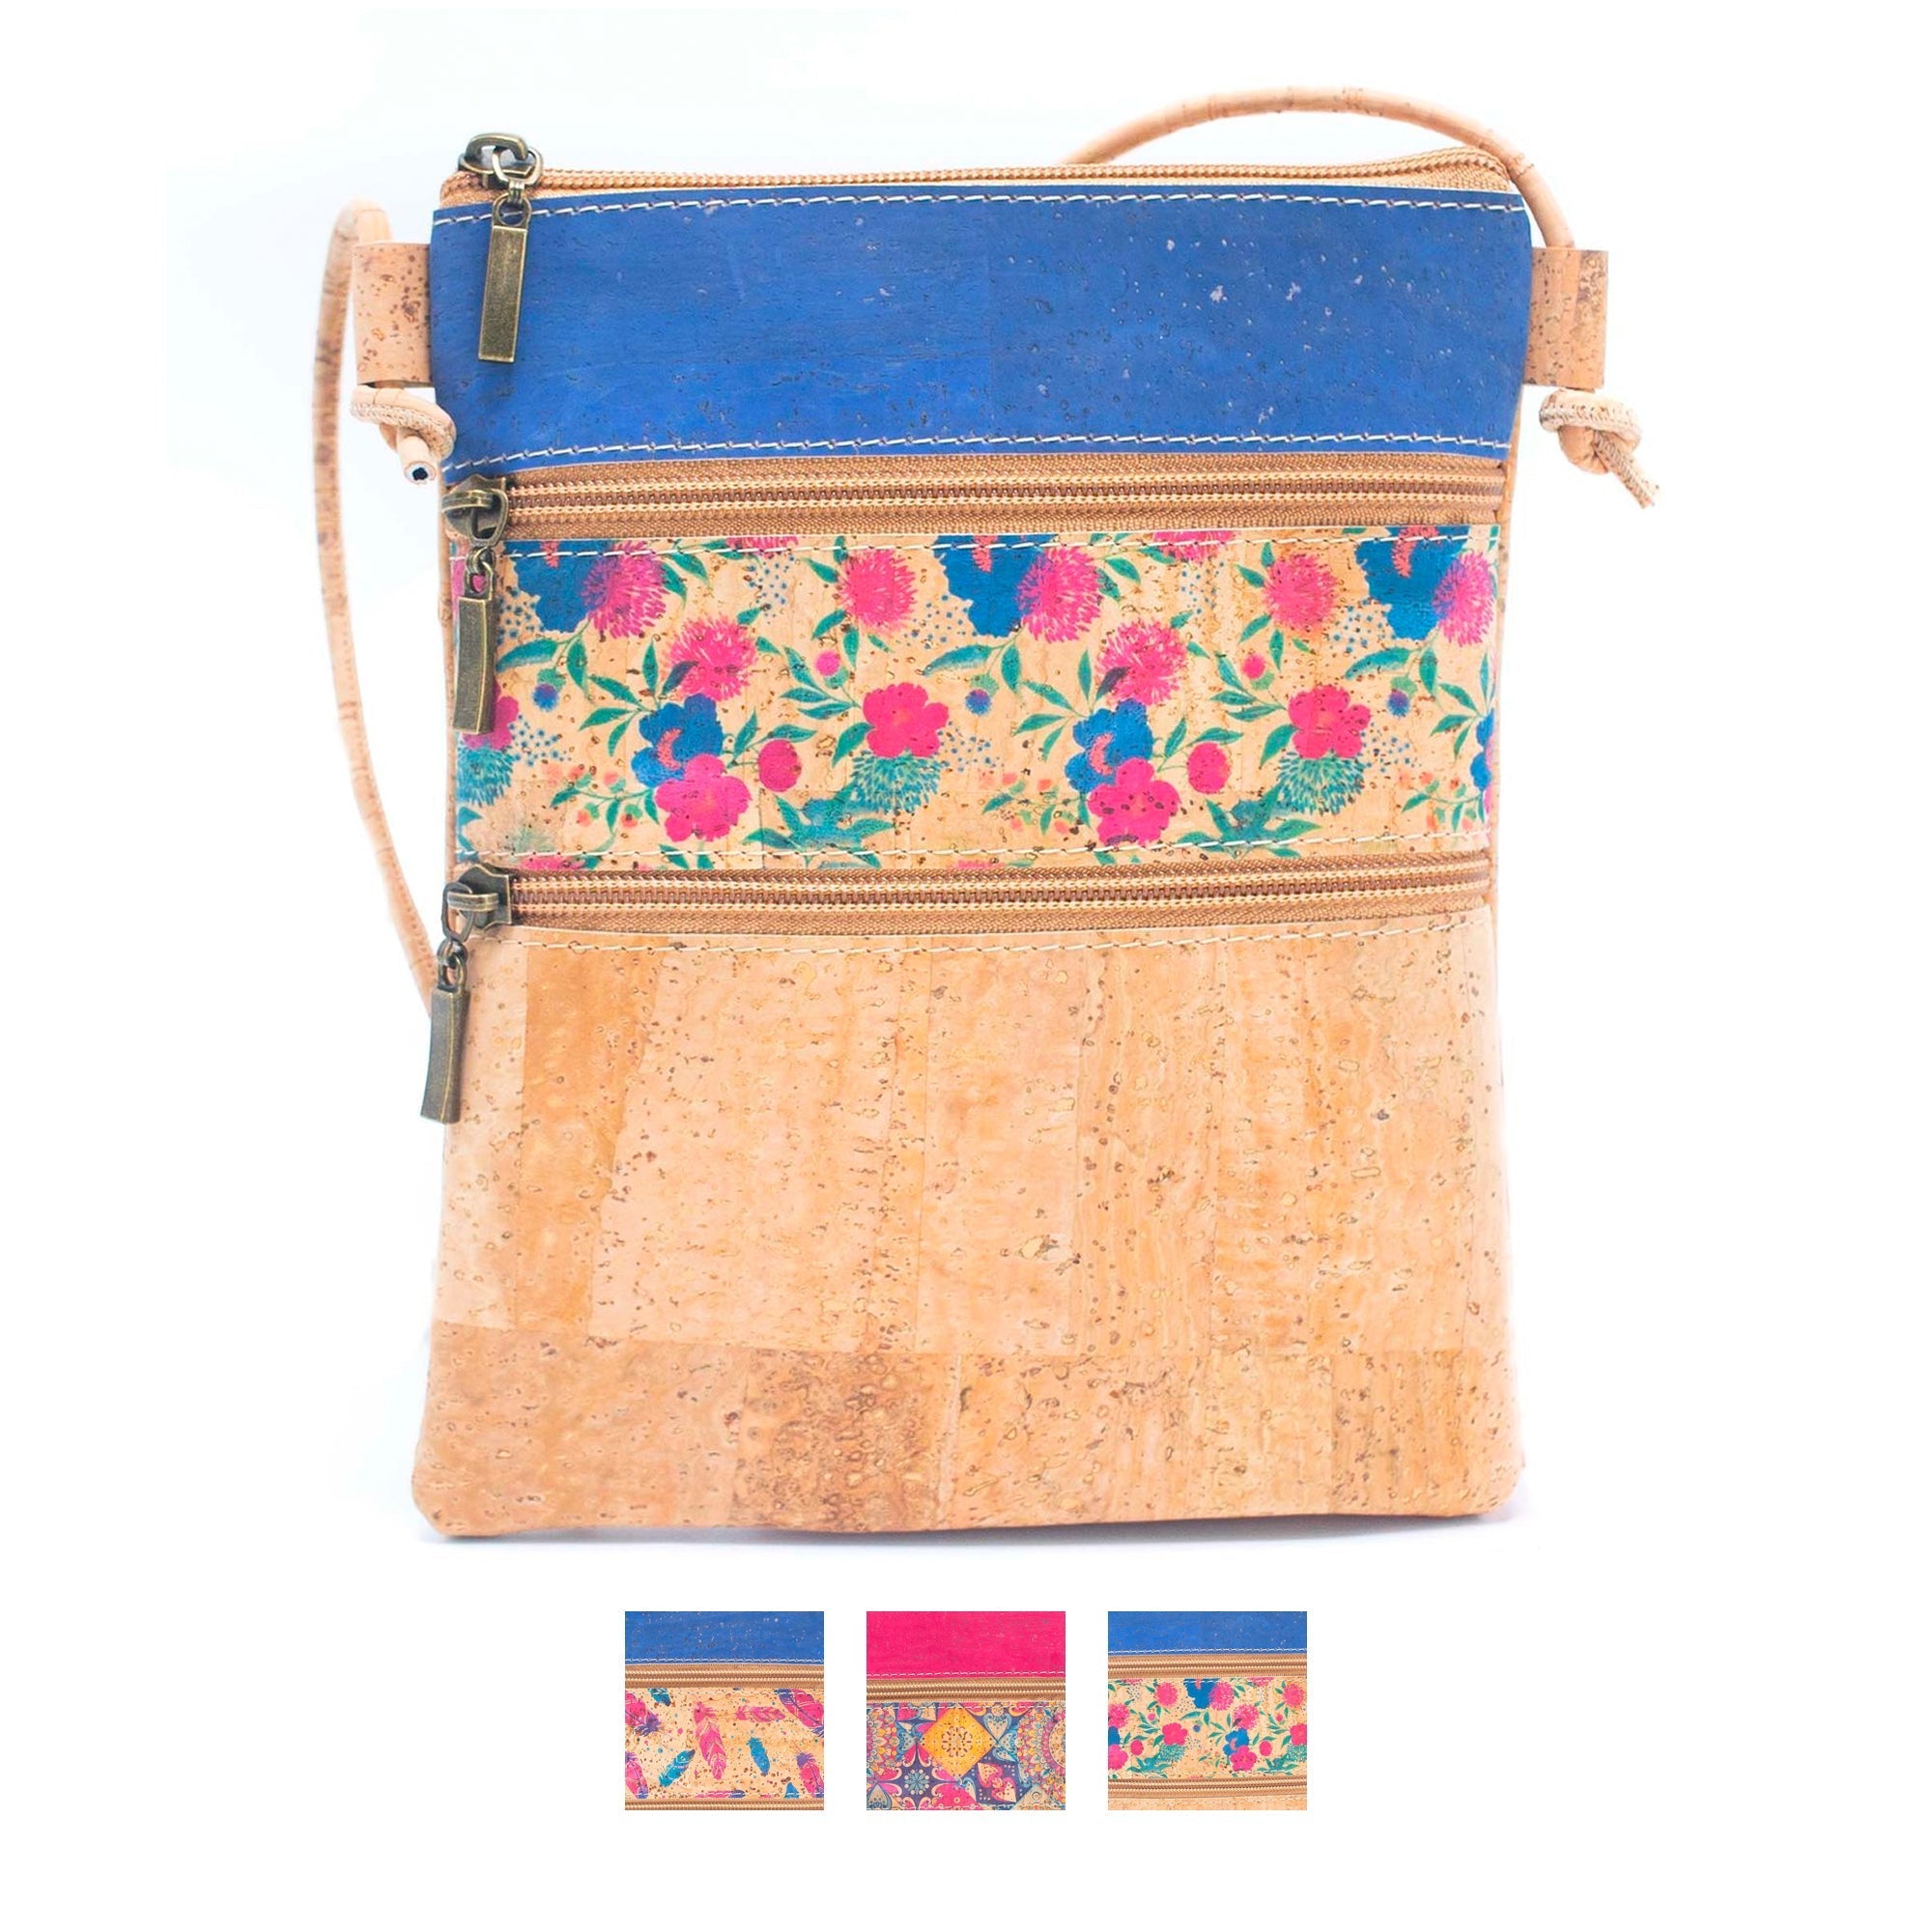 Buy NIUCUNZH Floral Pattern Women Purse, Leather Ladies Designer Tote Bag  Unique Handbag Multicolor Patchwork Shoulder Bags at Amazon.in